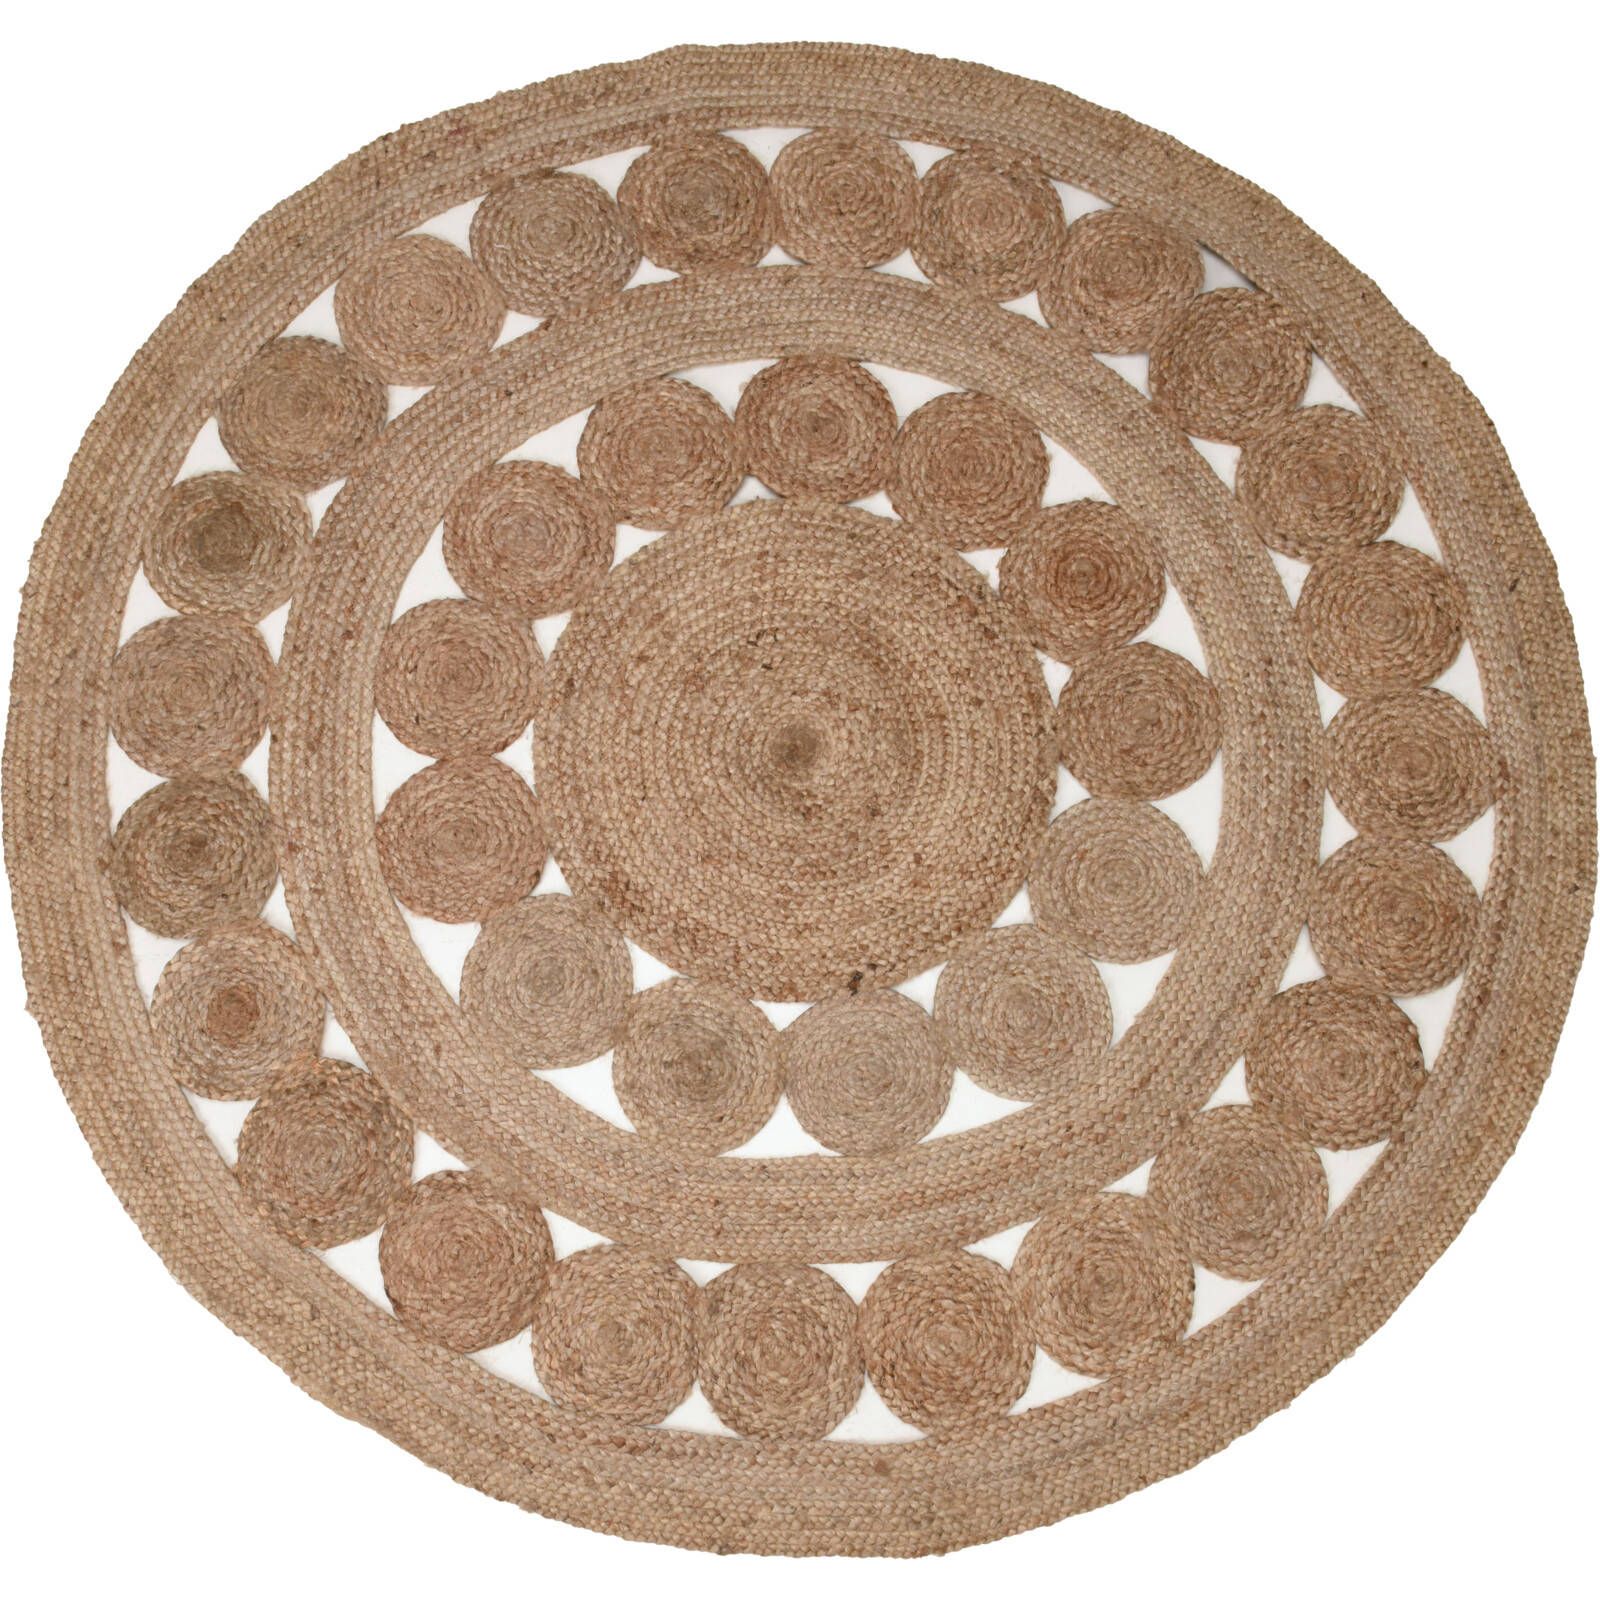 Home Styling Collection Jutový koberec, 150 cm - EMAKO.CZ s.r.o.